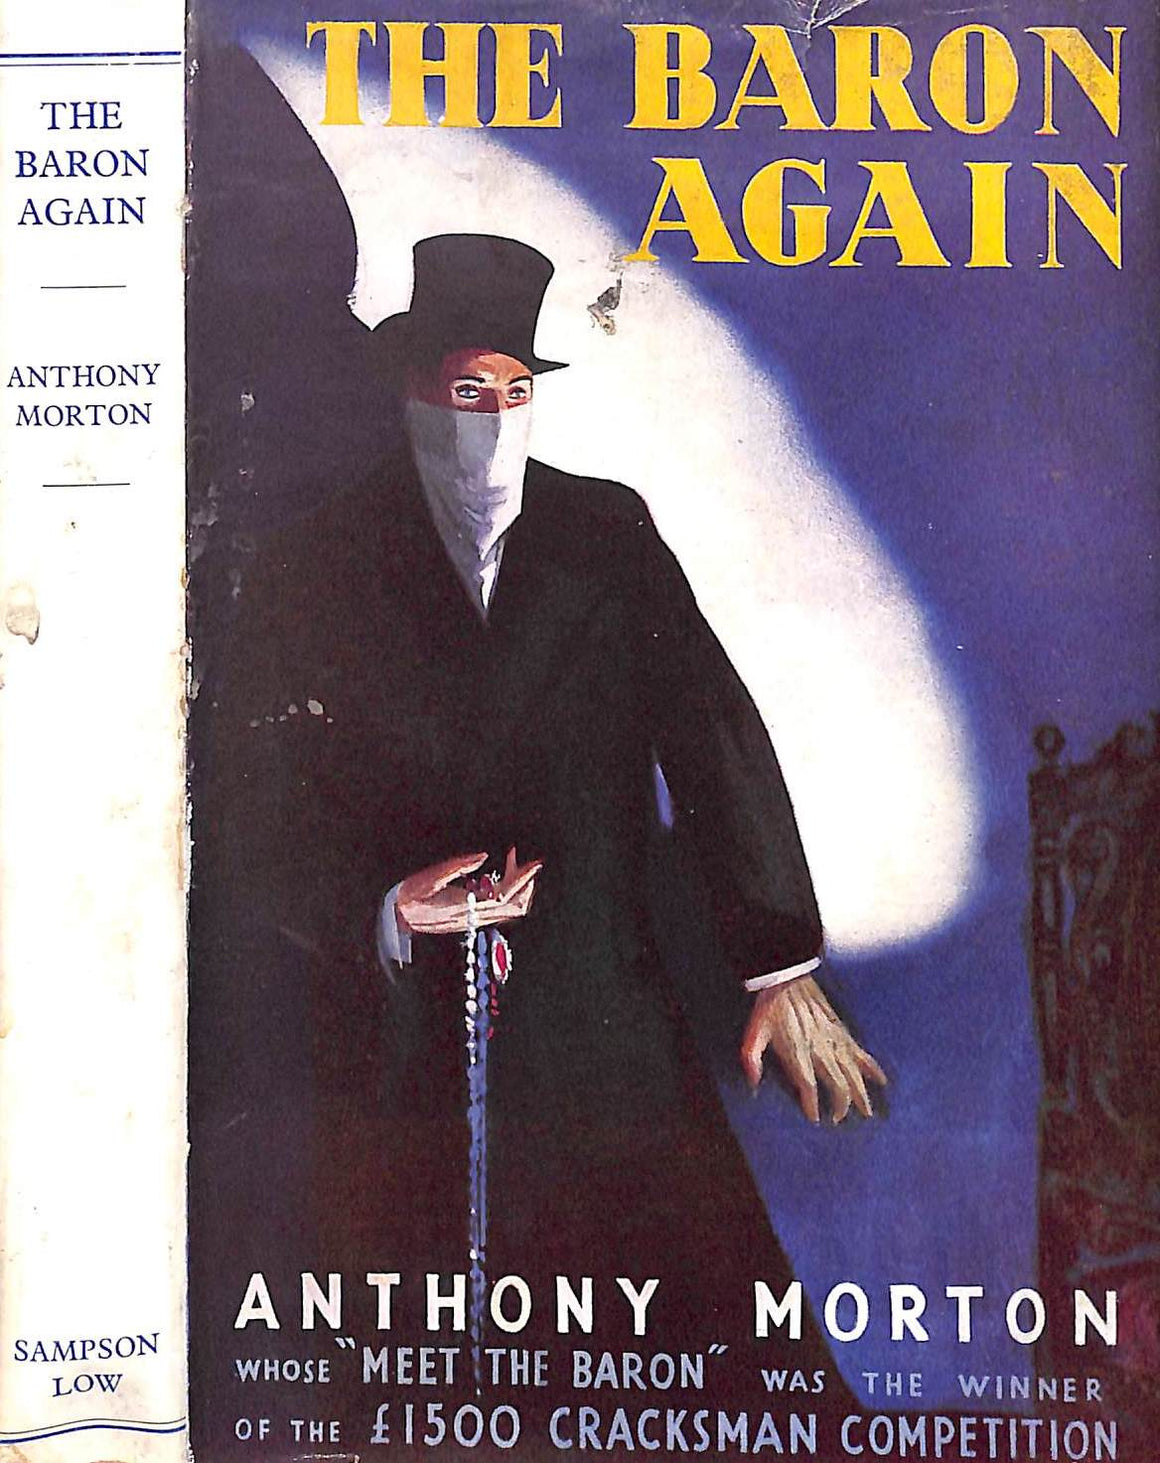 "The Baron Again" 1938 Anthony Morton [John Creasey]